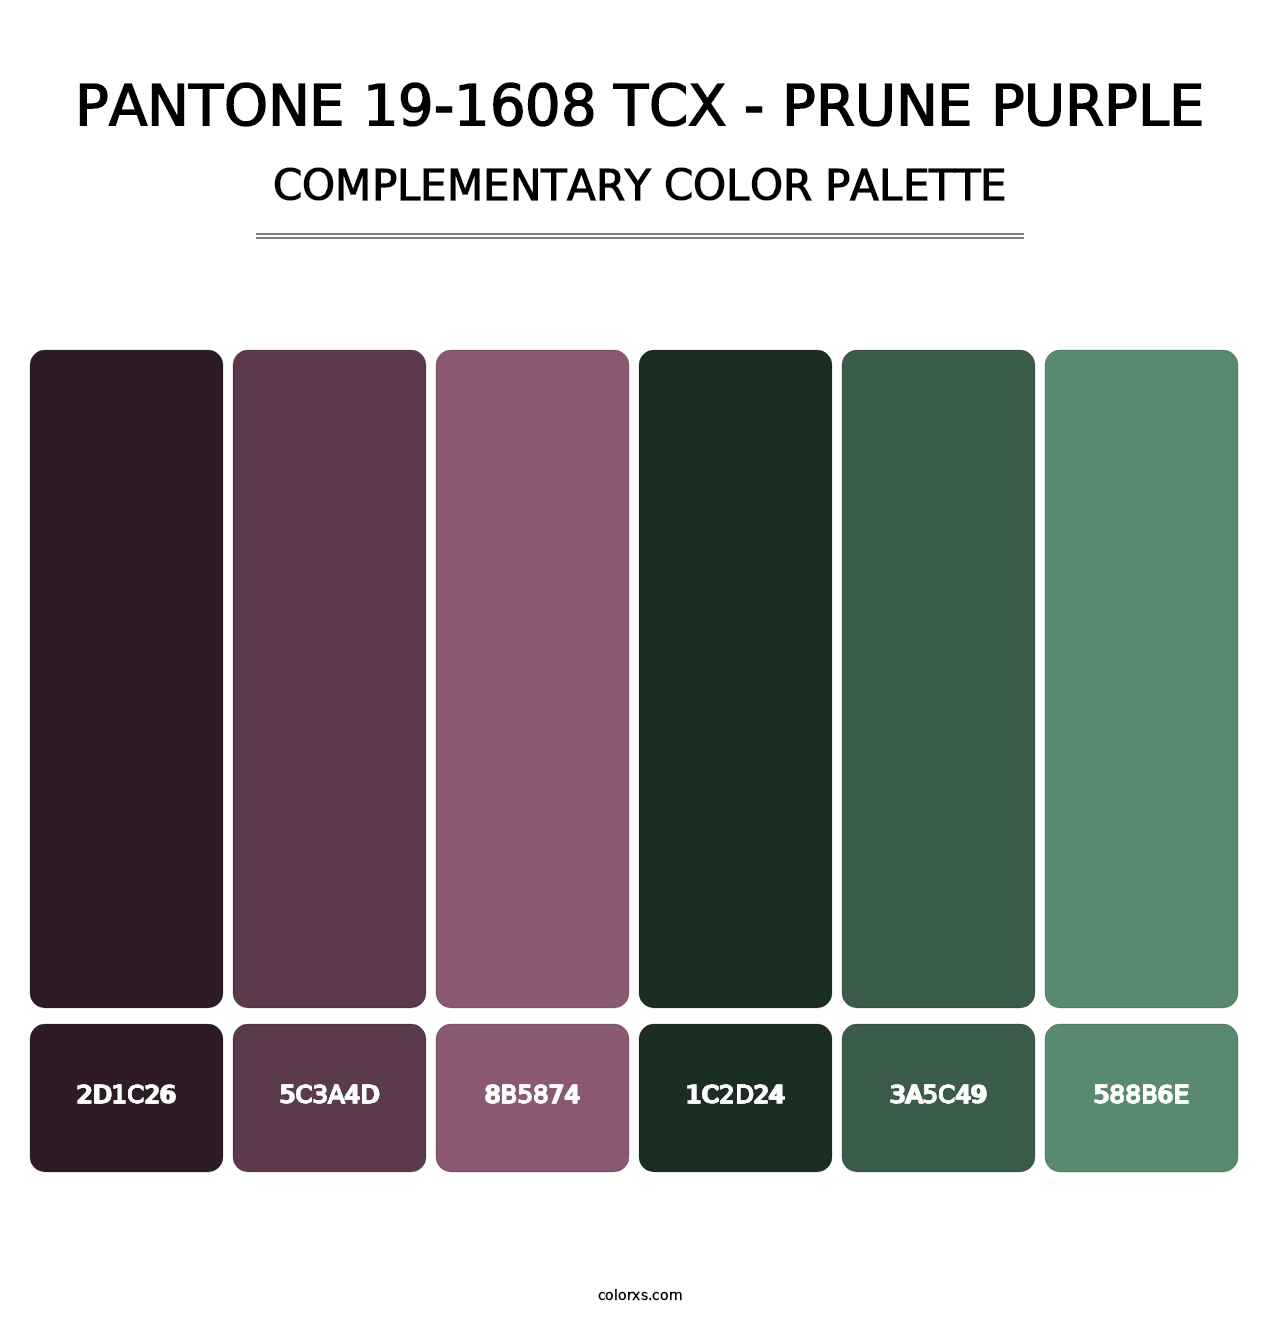 PANTONE 19-1608 TCX - Prune Purple - Complementary Color Palette